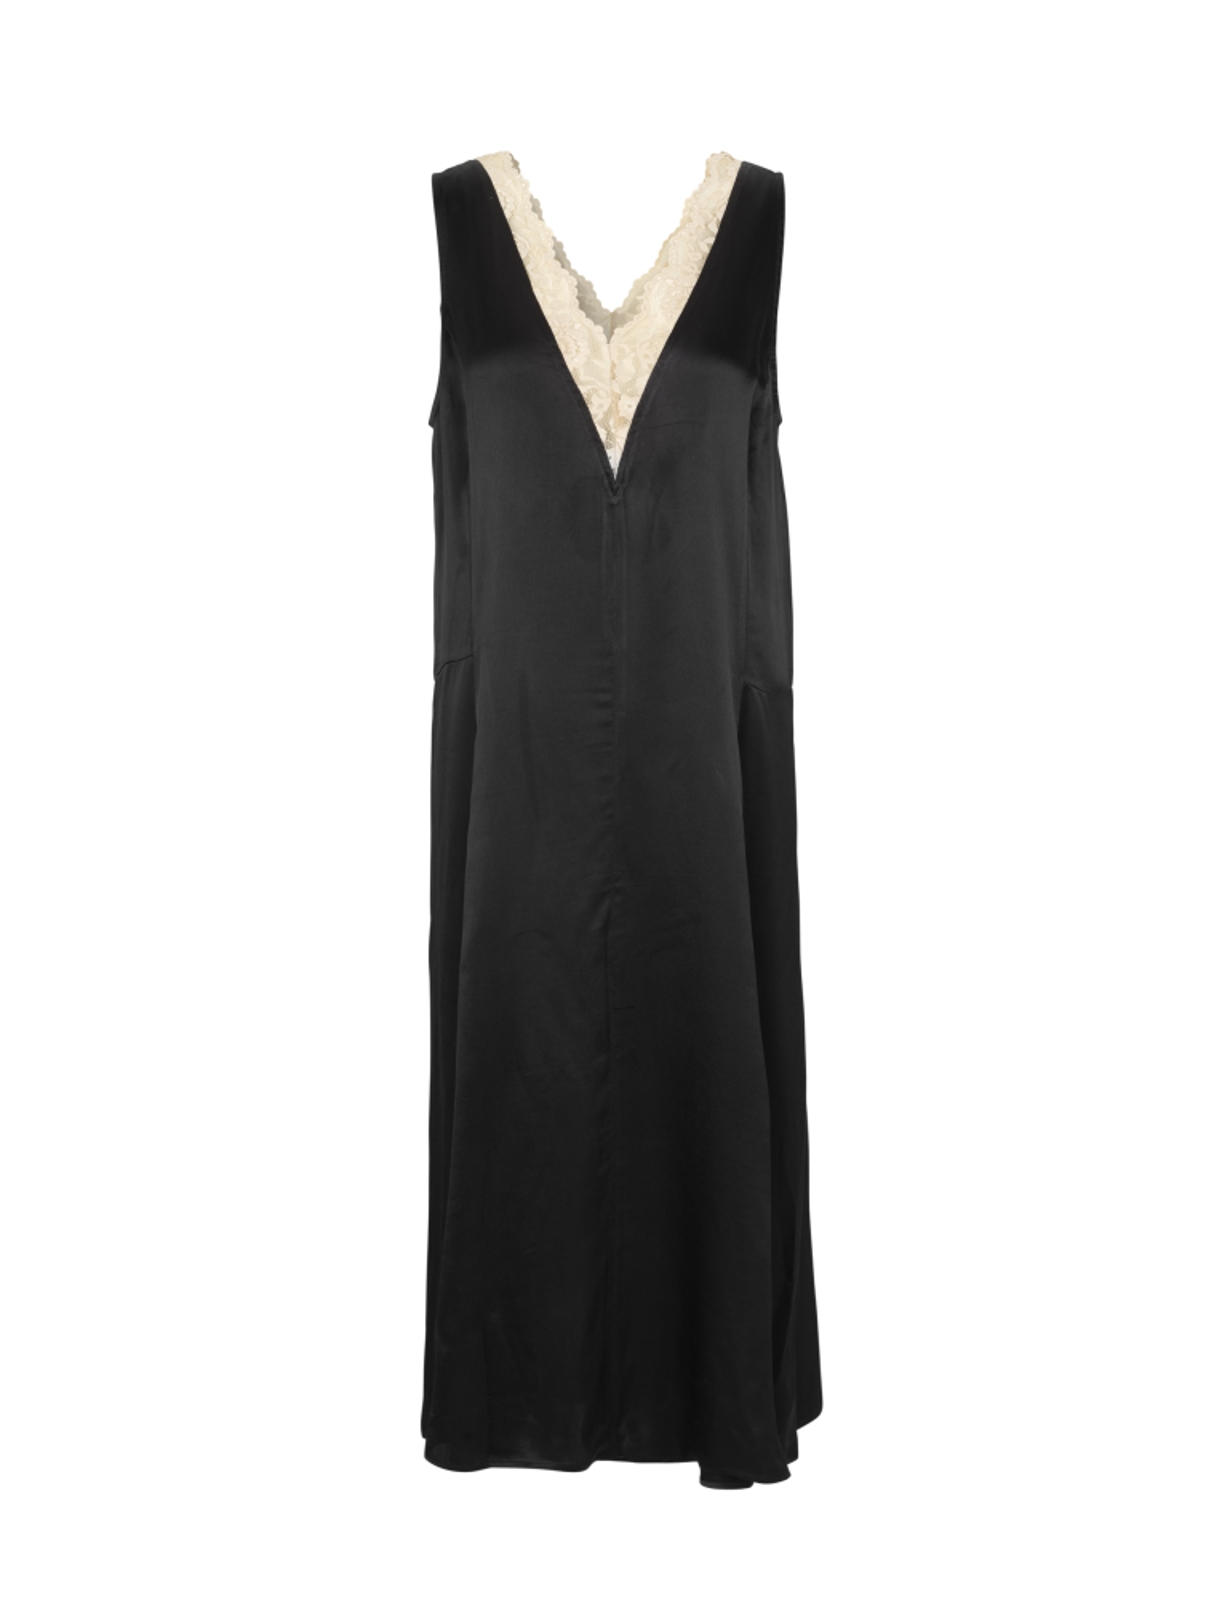 Levete Room Florence 14 Dress Black: XS - Quattro Rish